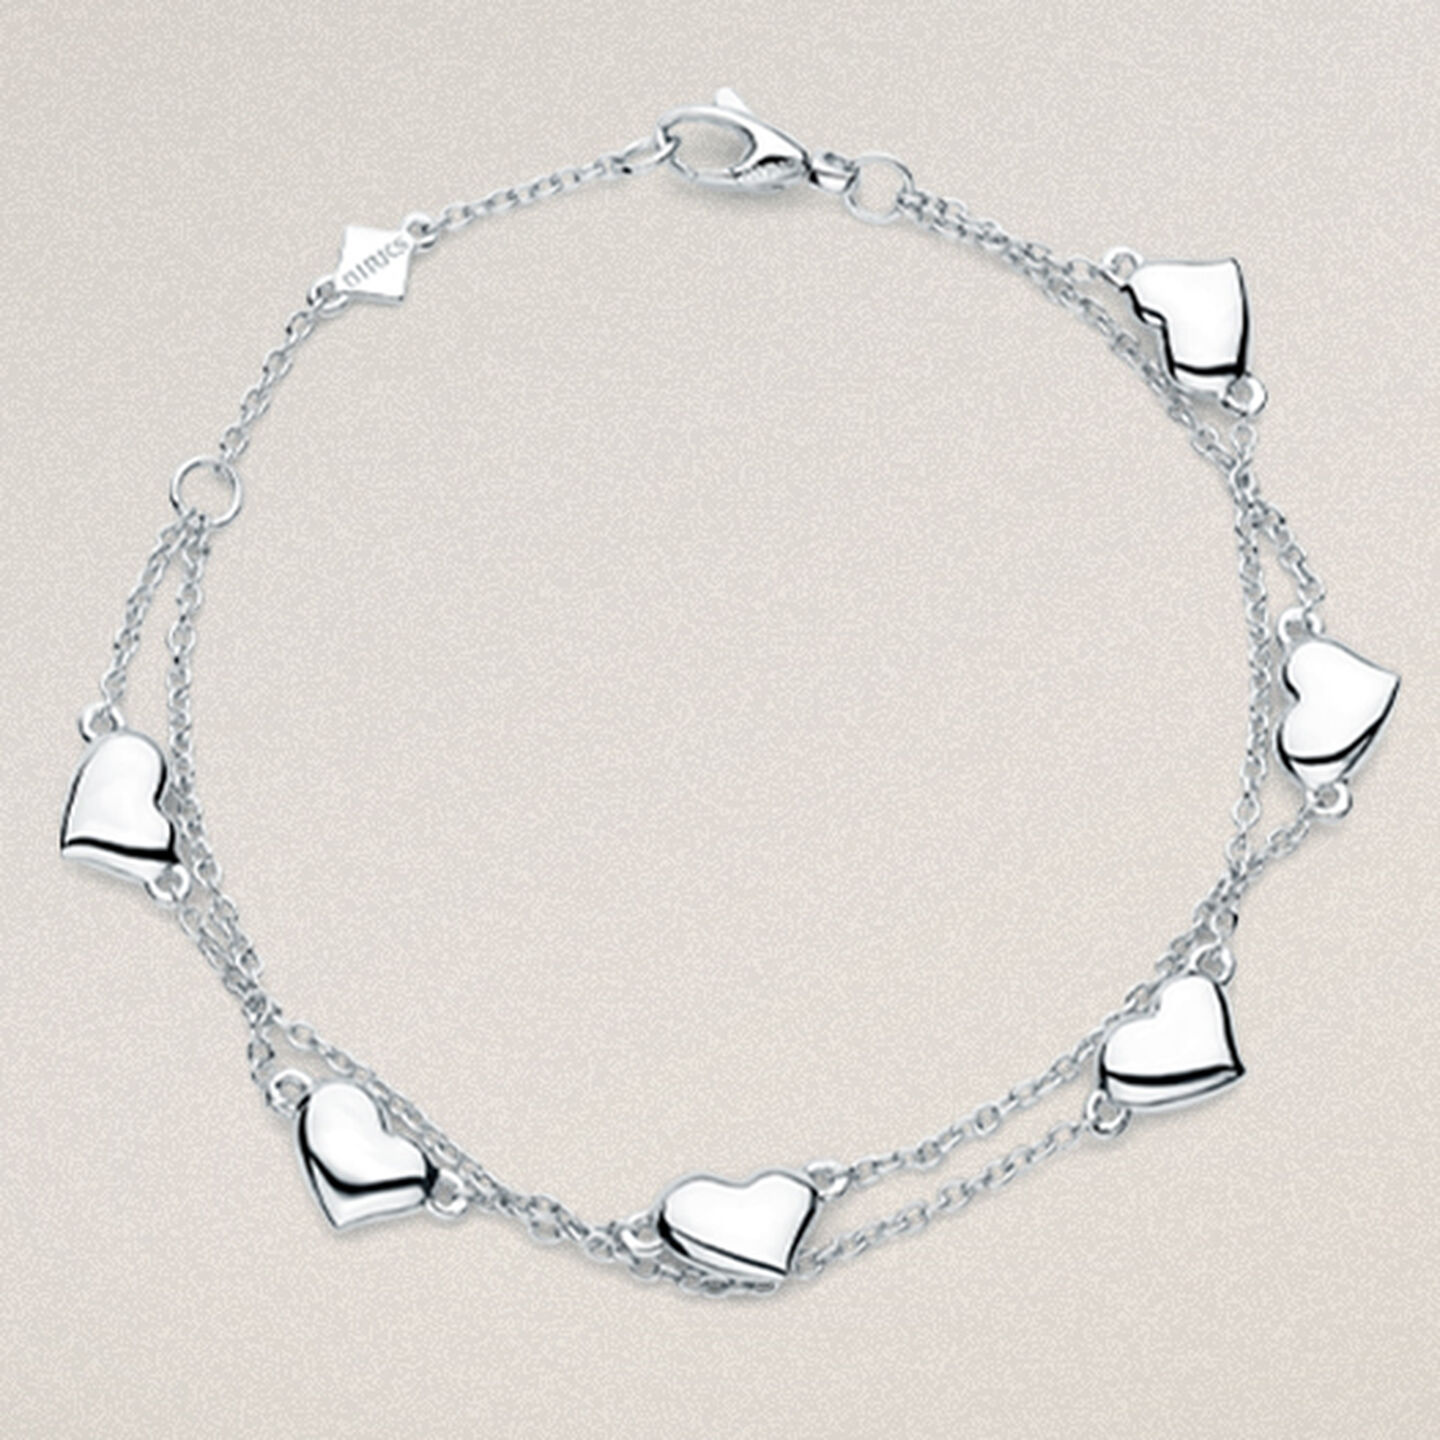 Birks heart bracelet in silver for babies on a beige background.